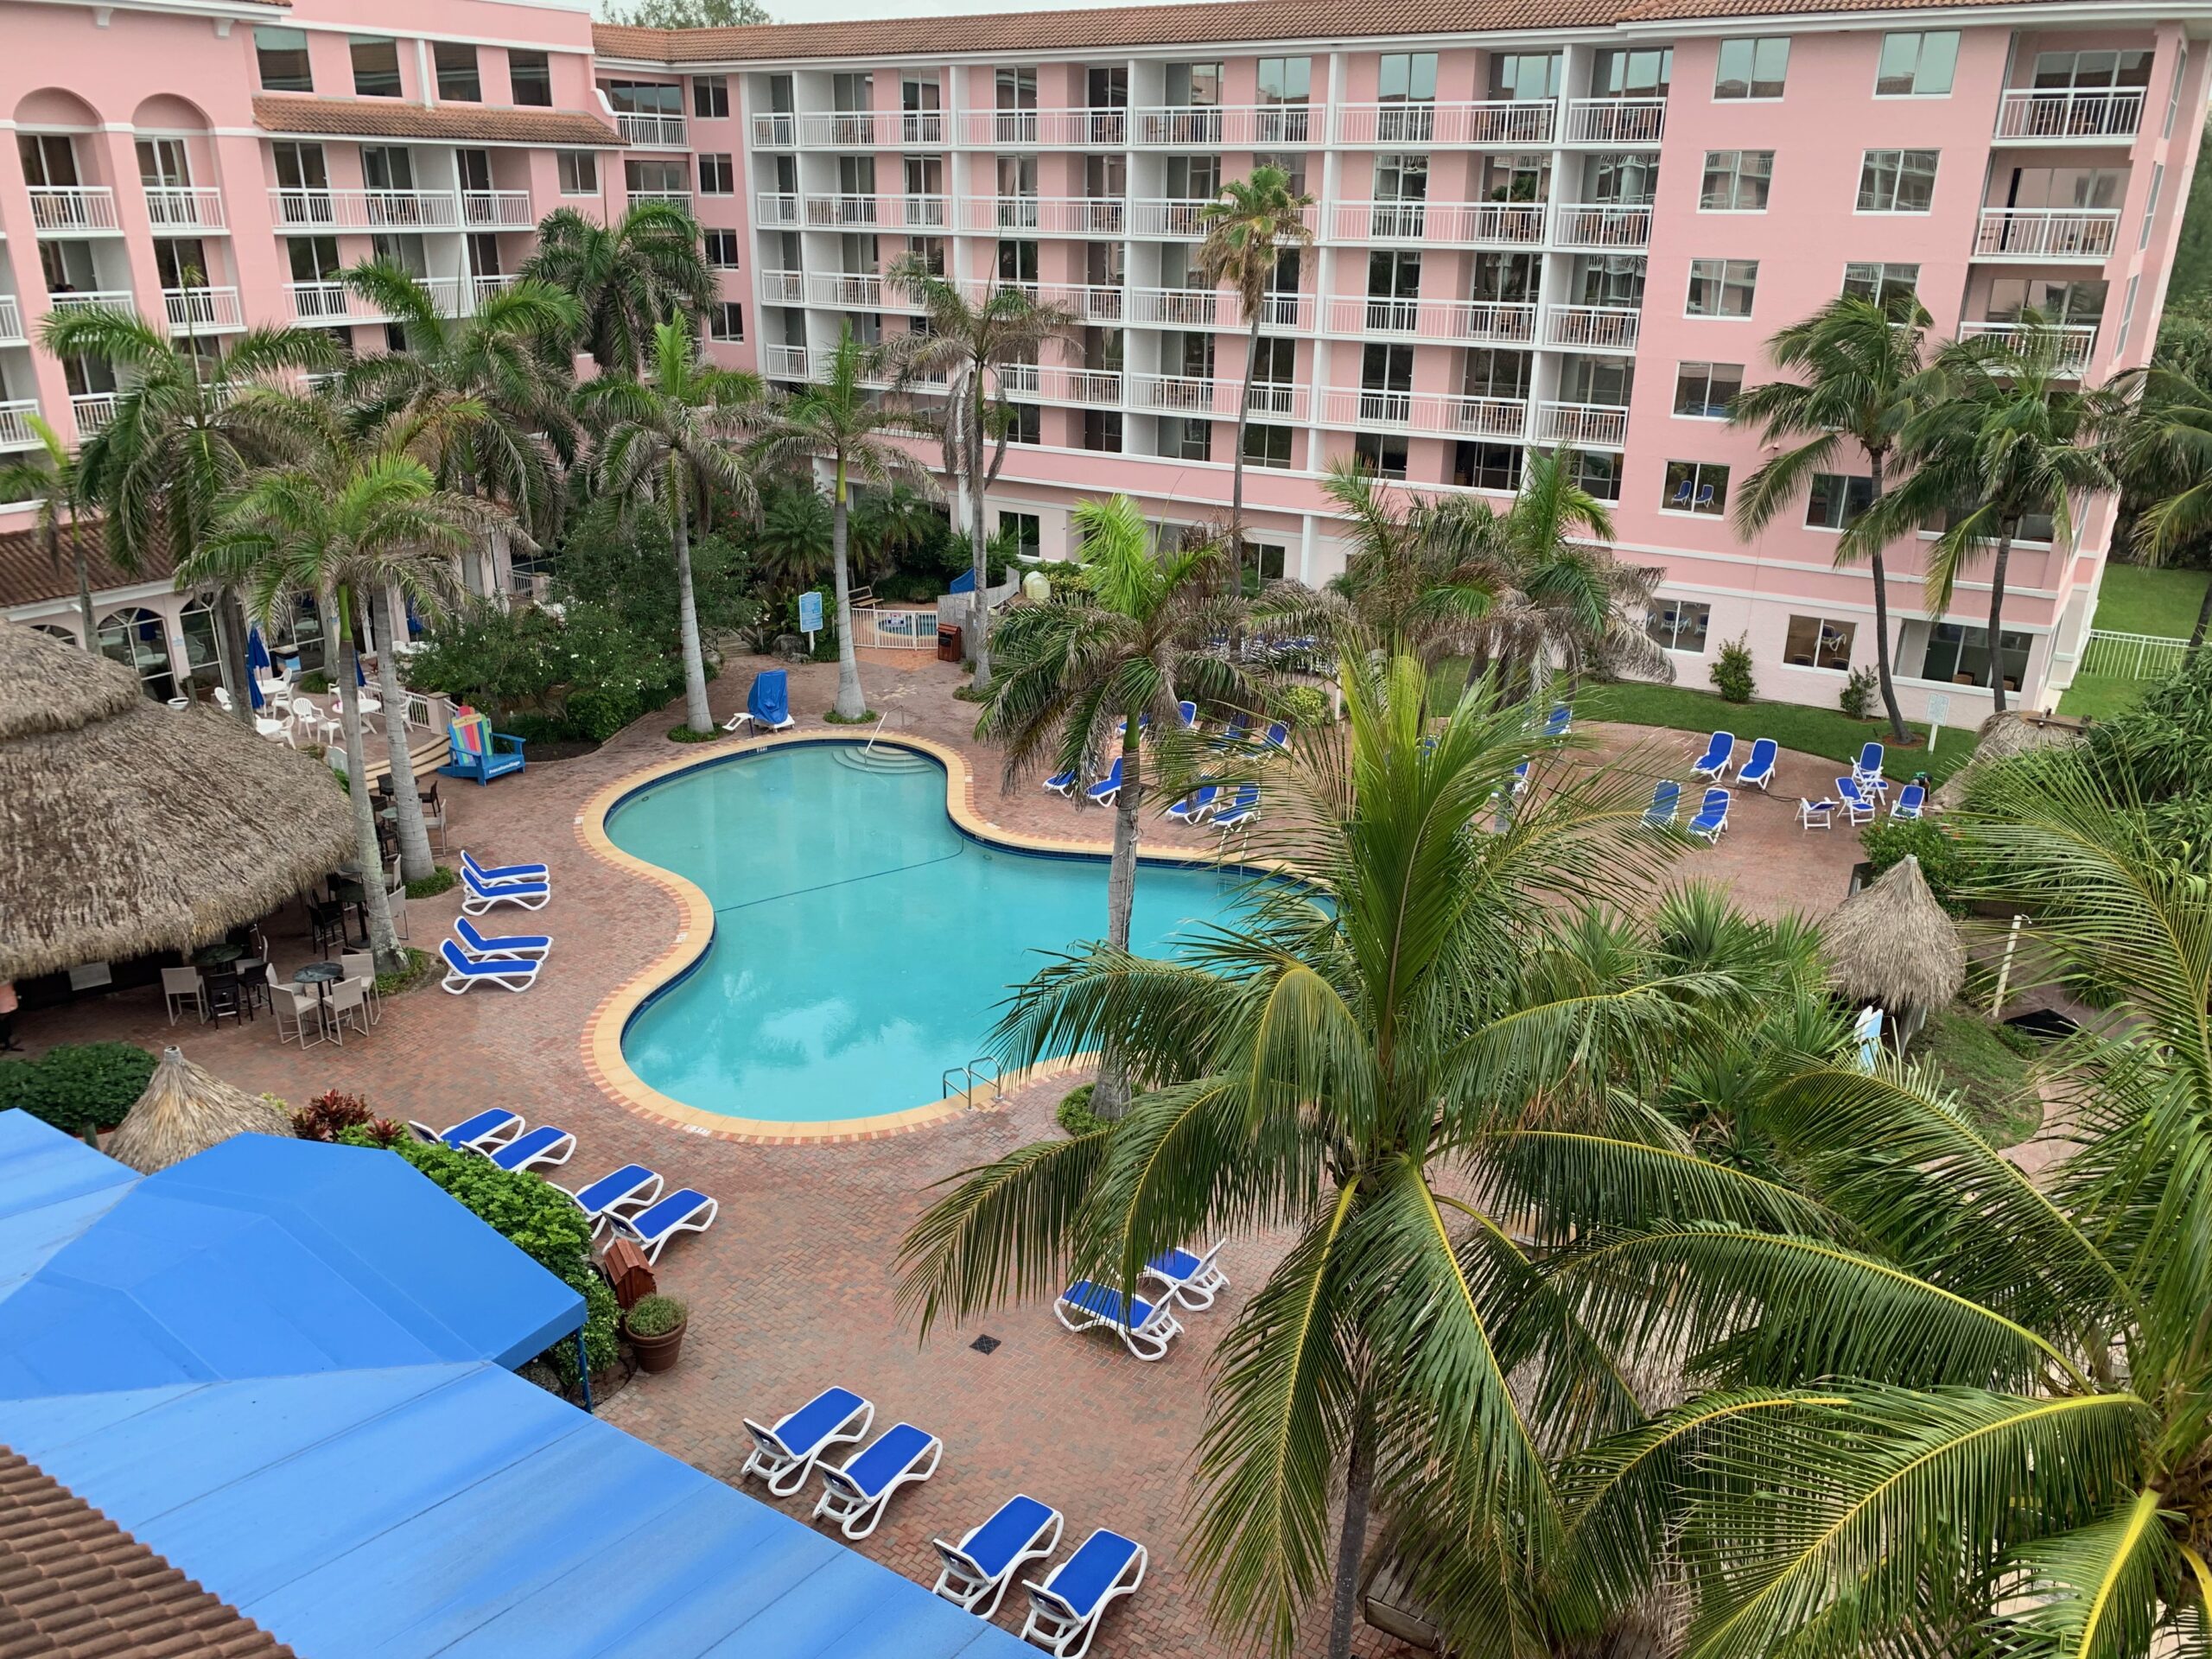 Palm Beach Shores Resort & Vacation Villas Overview –